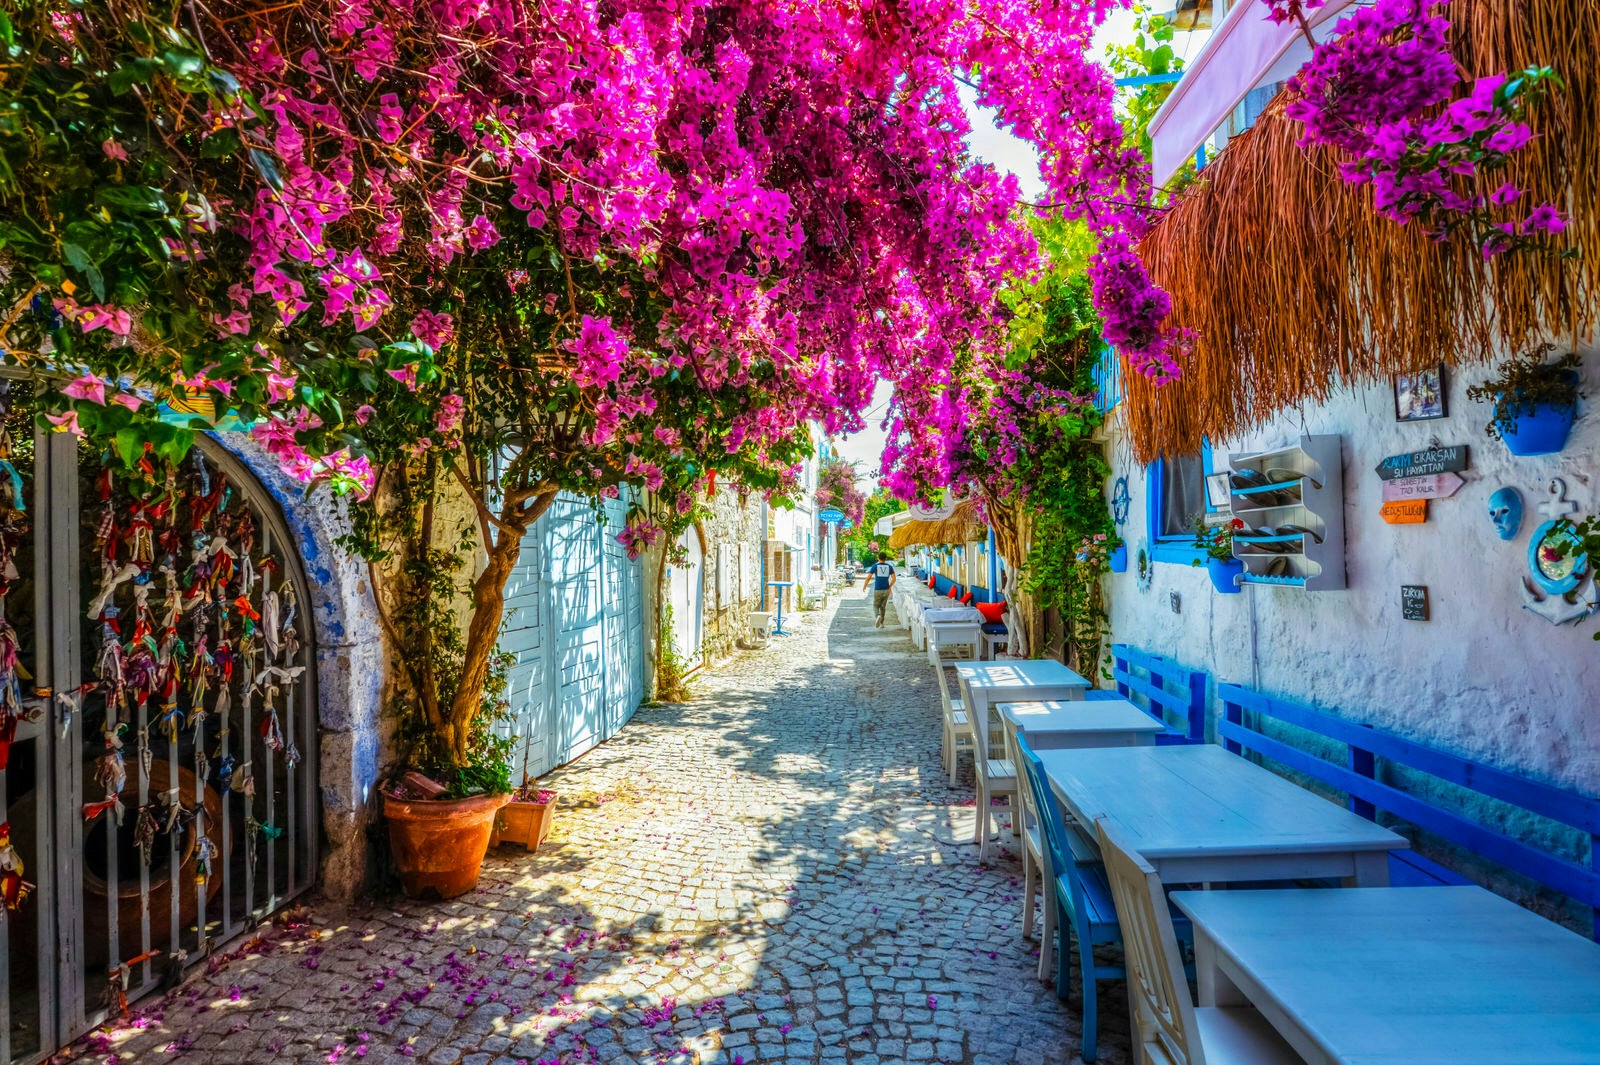 A street scene in colourful Alaçatı, one of Turkey's most upscale destinations